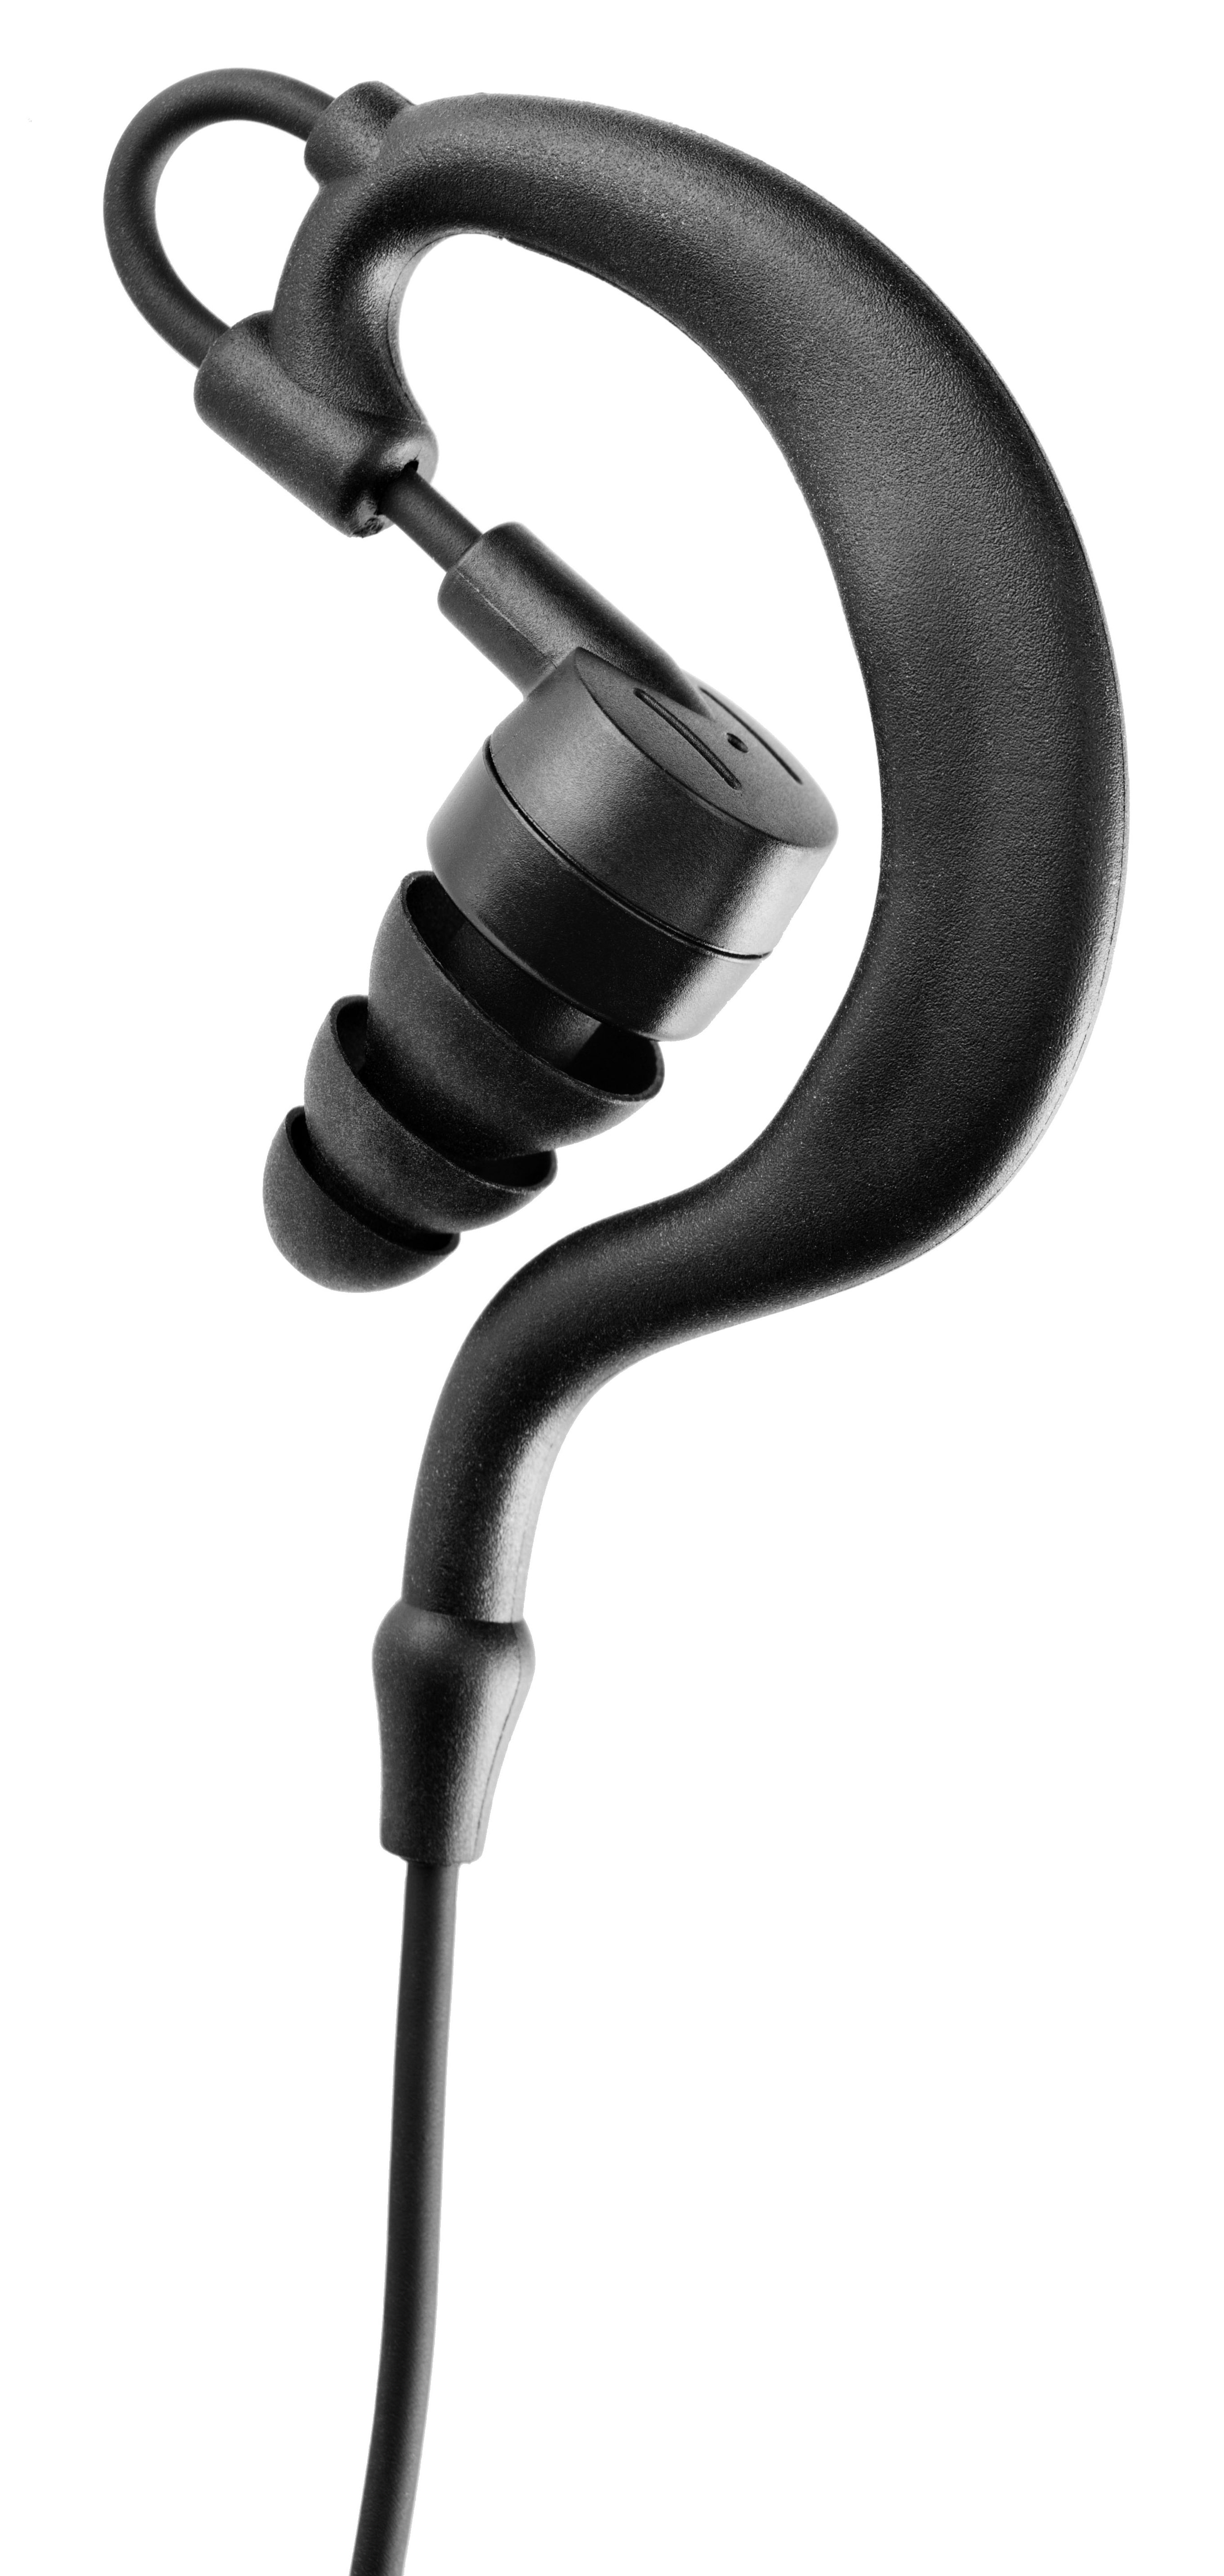 SAVOX RWE-101 wired earphone - drop proof and rugged